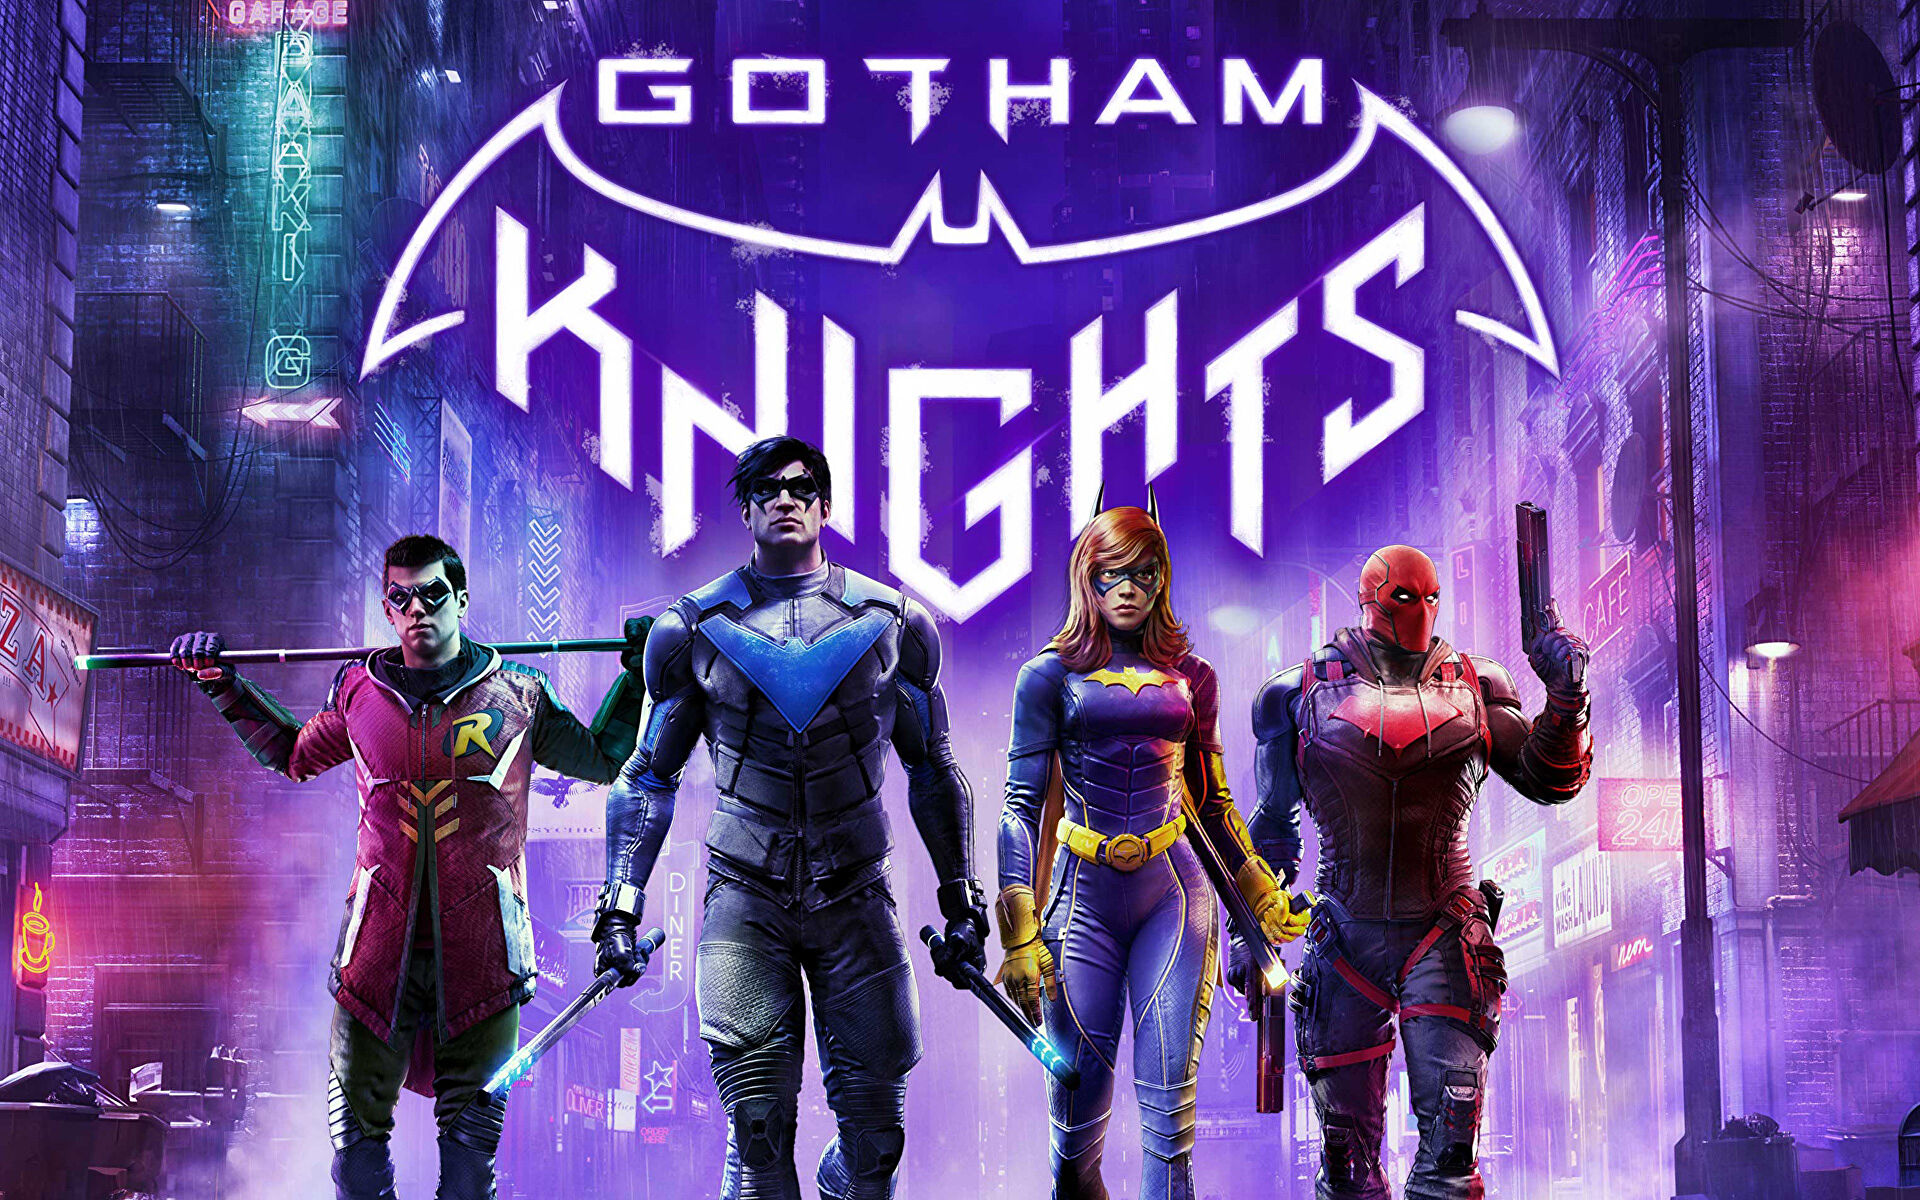 Review - Gotham Knights - WayTooManyGames